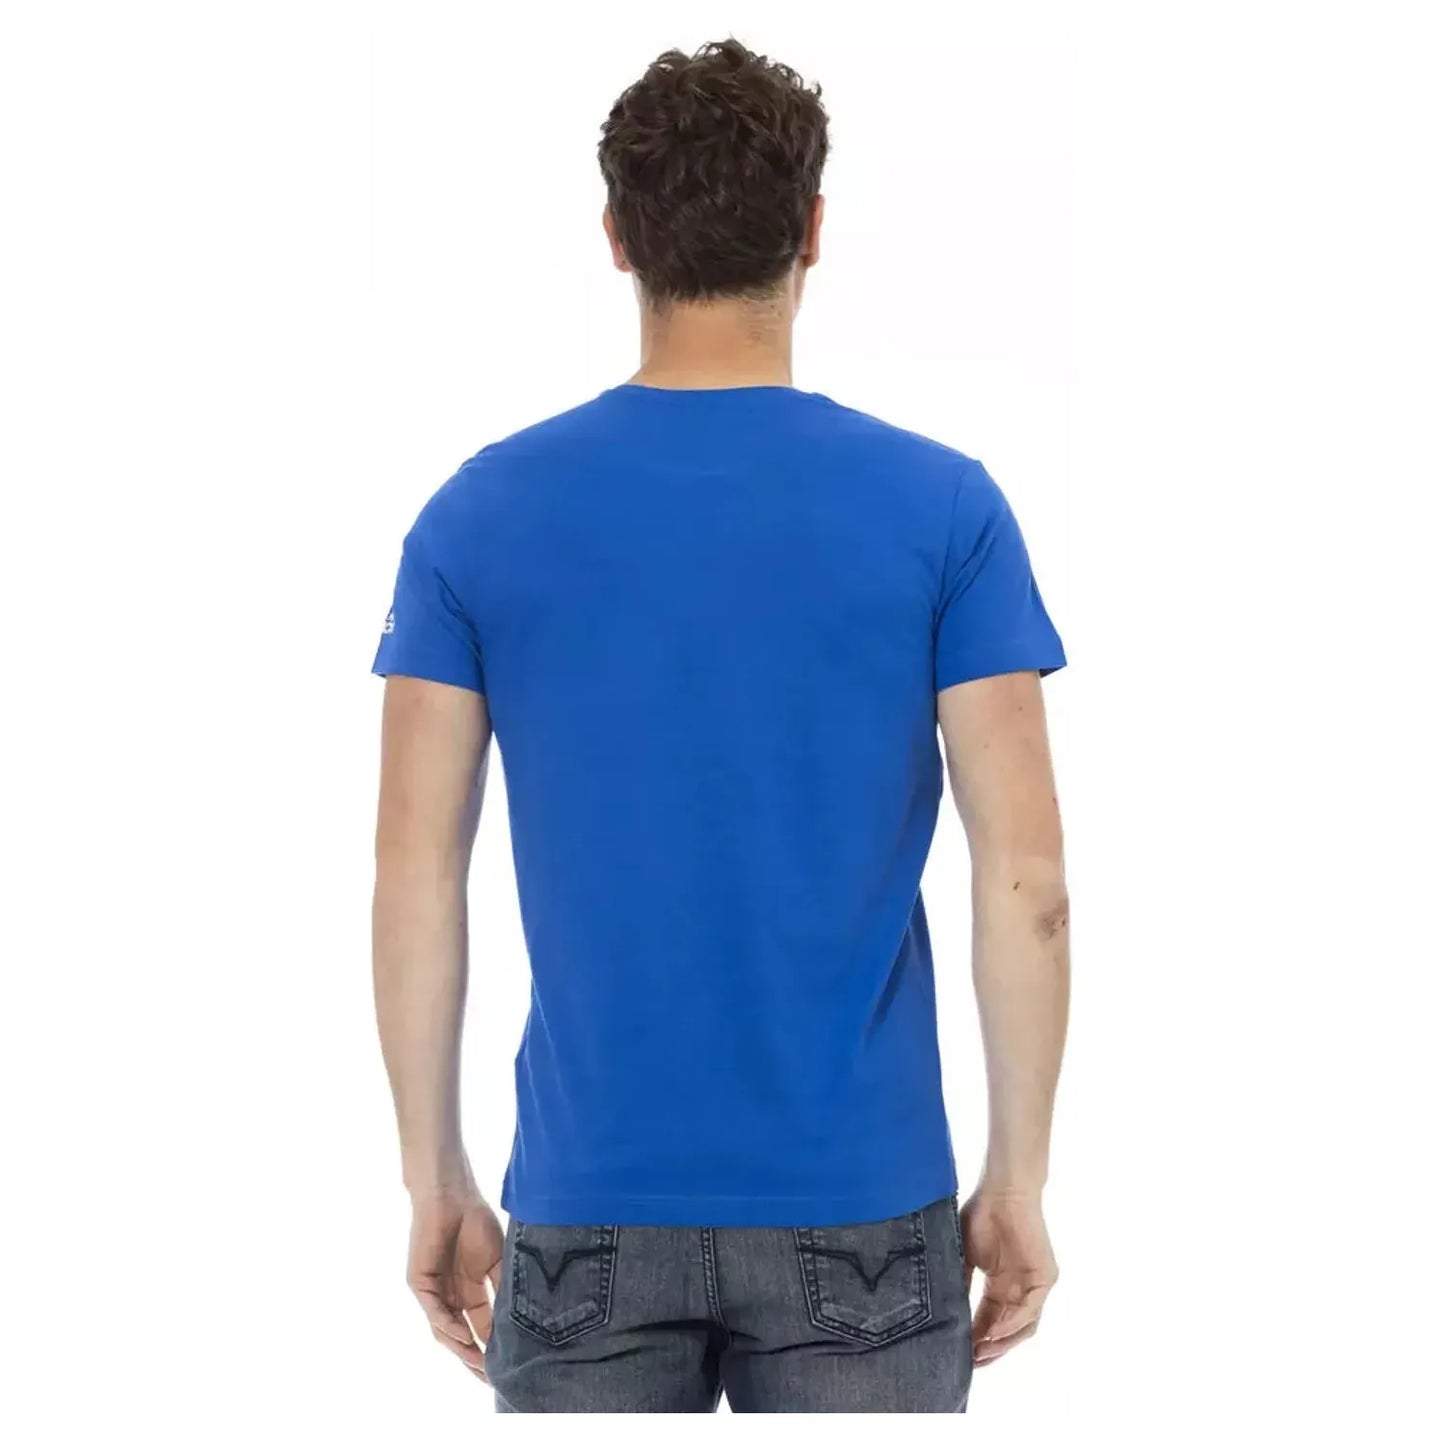 Trussardi Action Elegant Blue Short Sleeve Tee with Front Print blue-cotton-t-shirt-99